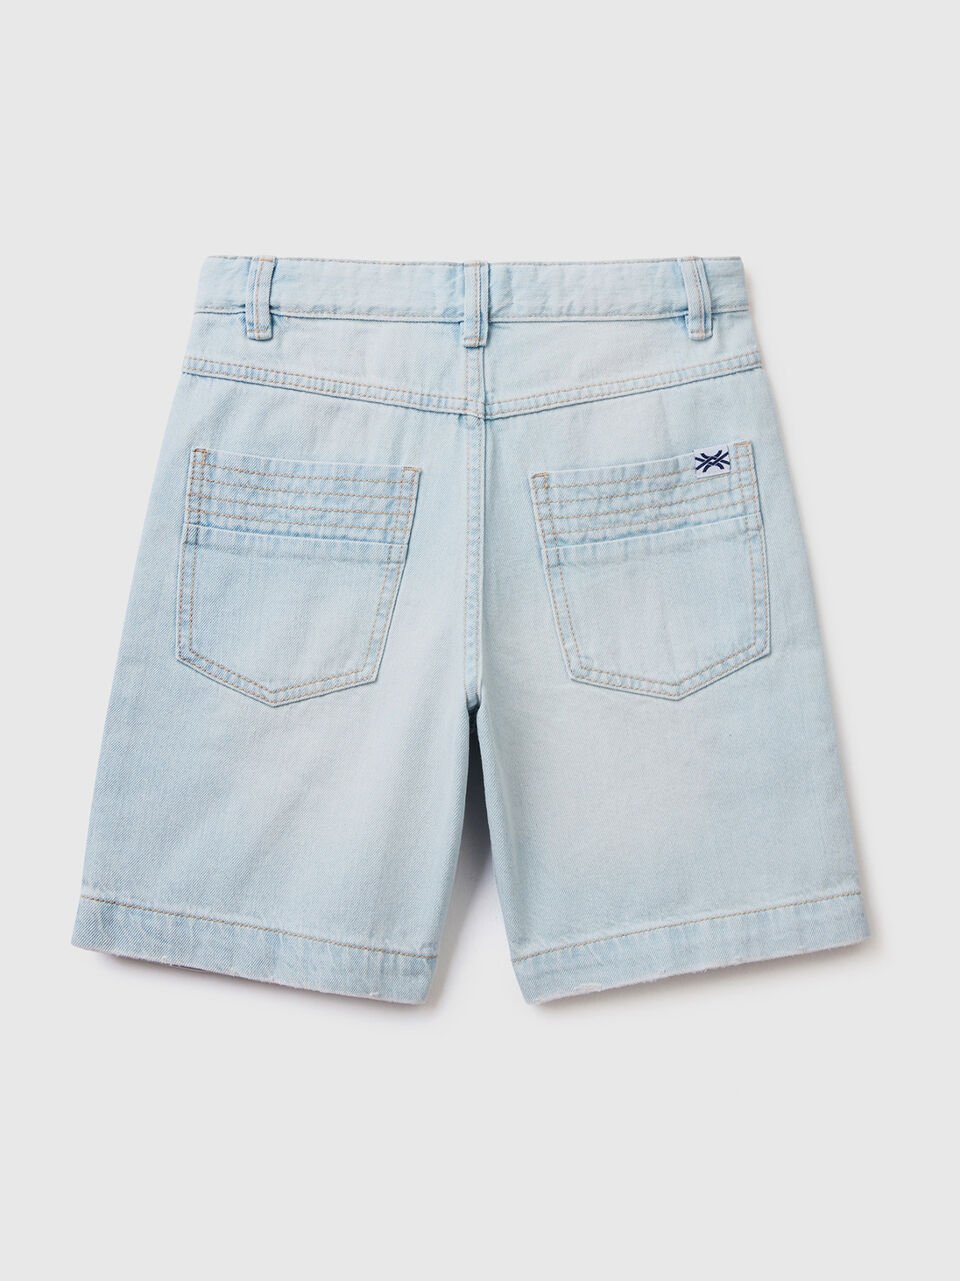 benetton shop online Shorts di jeans chiari